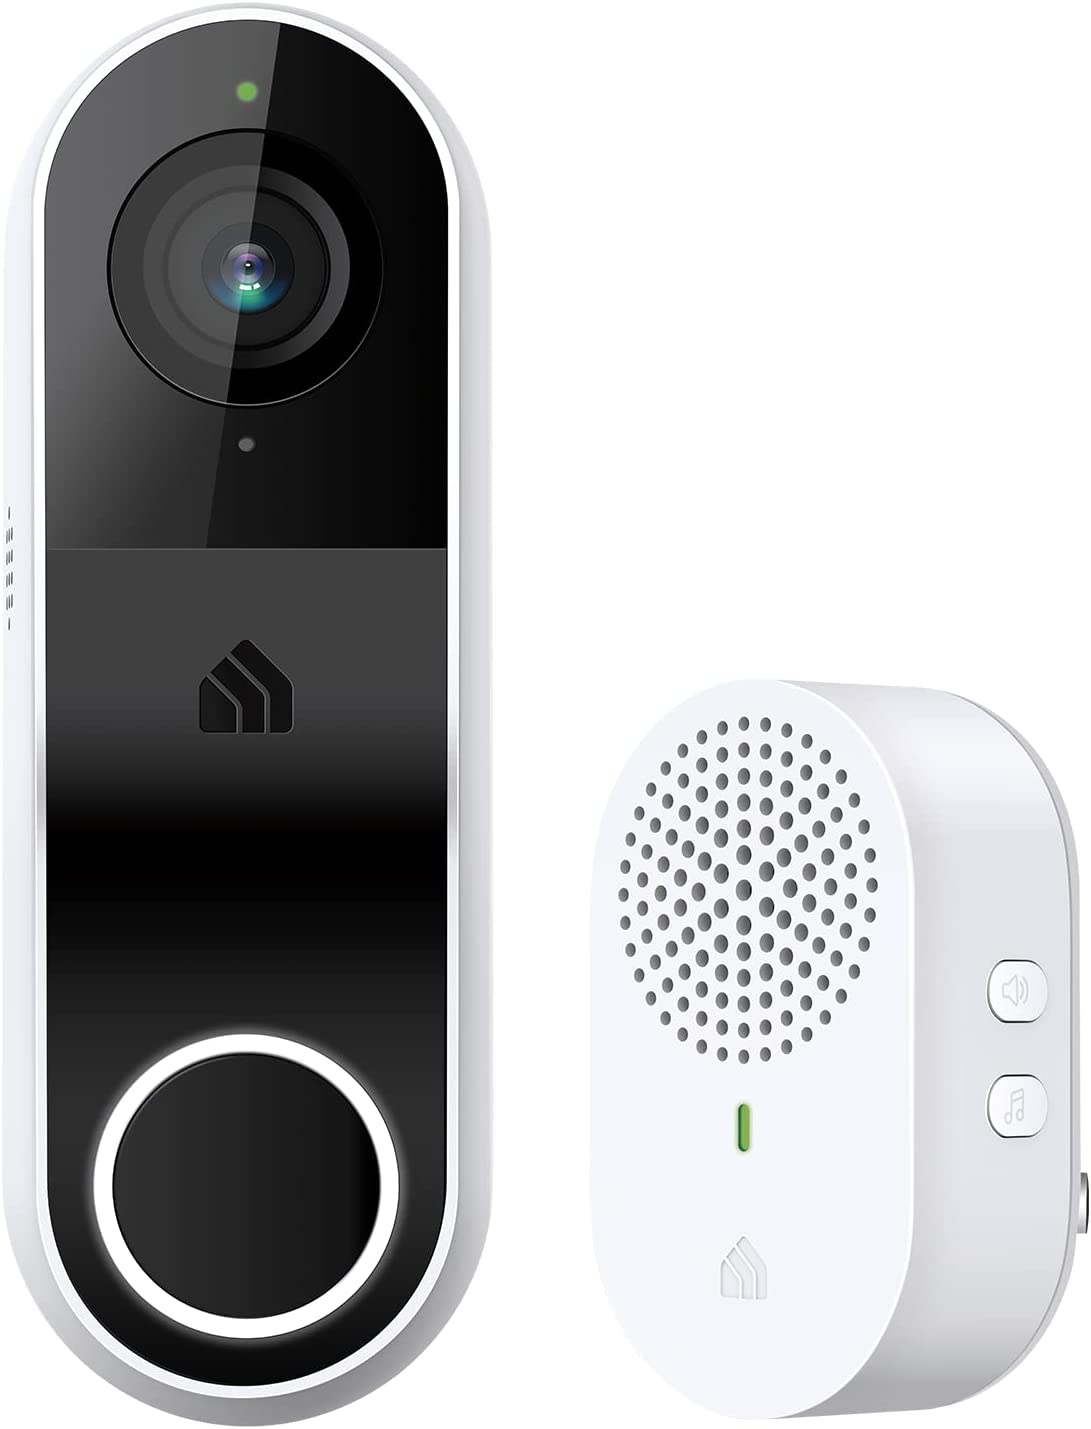 Kasa Smart Video Doorbell Camera – Just $39.99 at Amazon